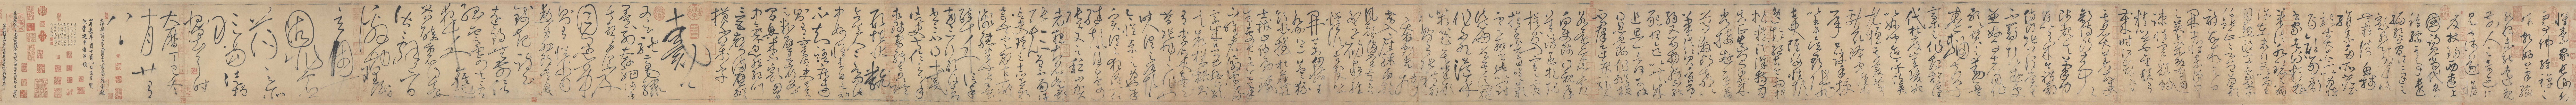 General 24462x1000 kanji calligraphy Chinese